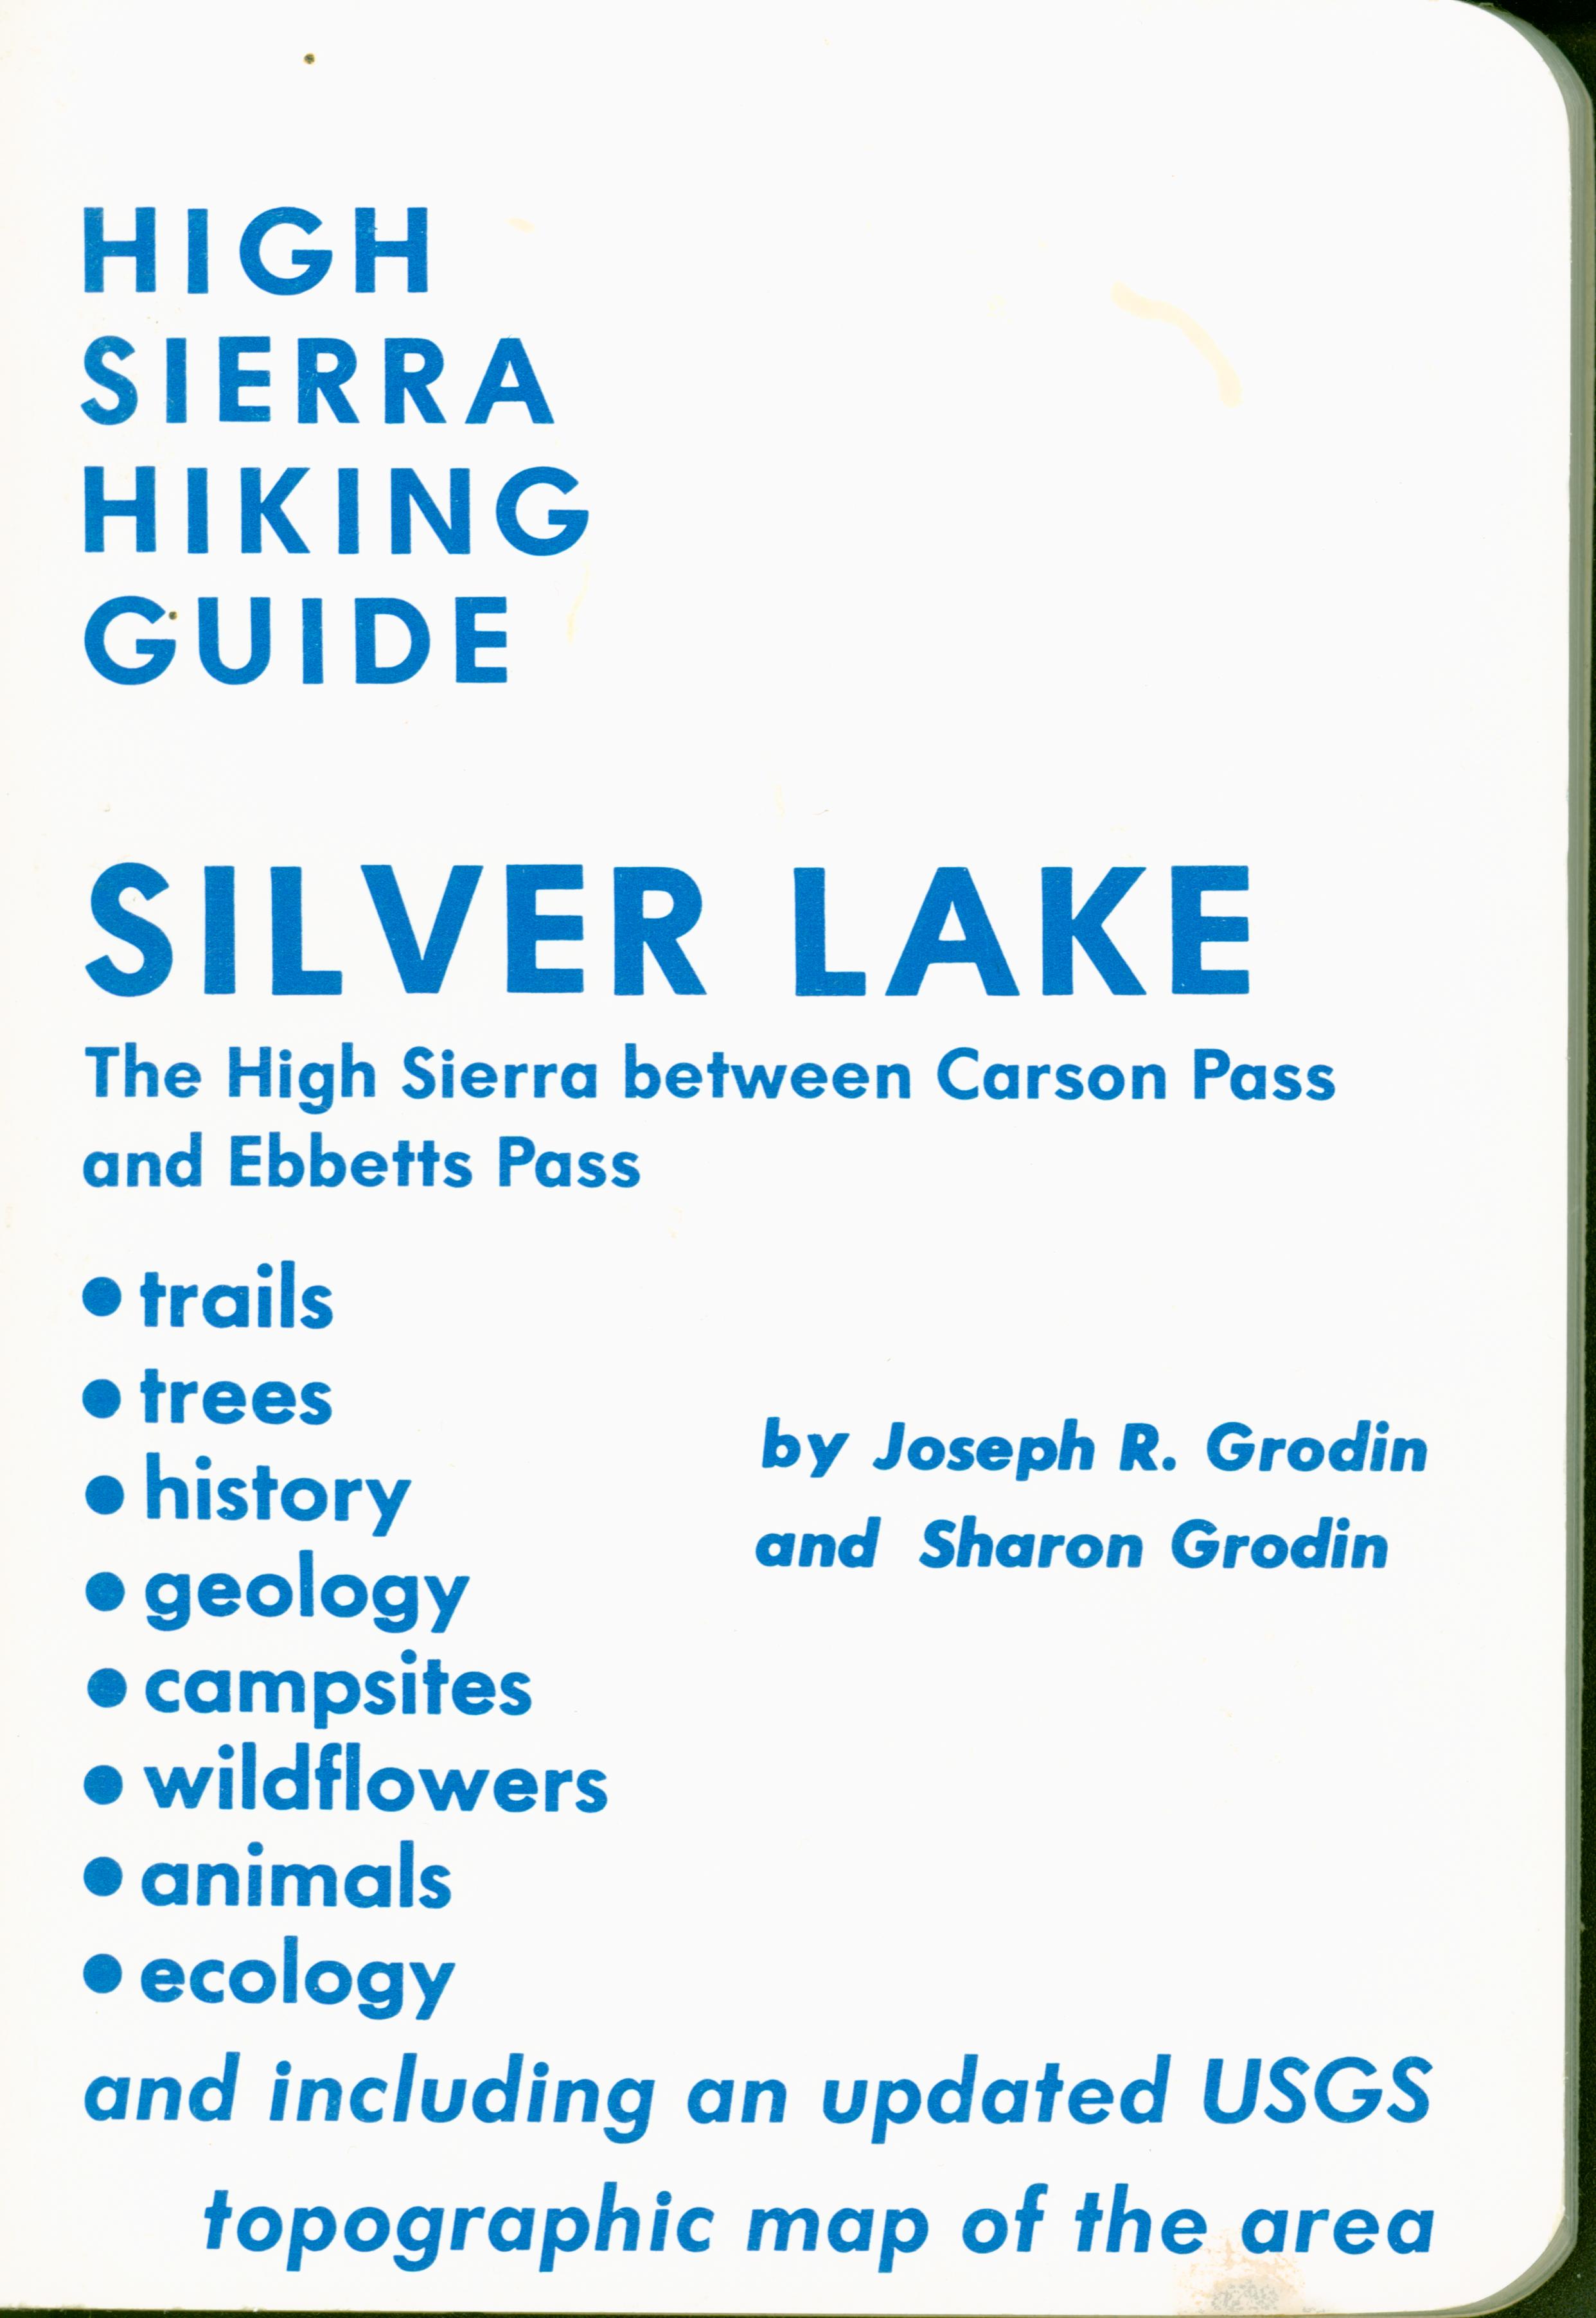 SILVER LAKE: High Sierra Hiking Guide #17; the High Sierra between Carson Pass and Ebbetts Pass.